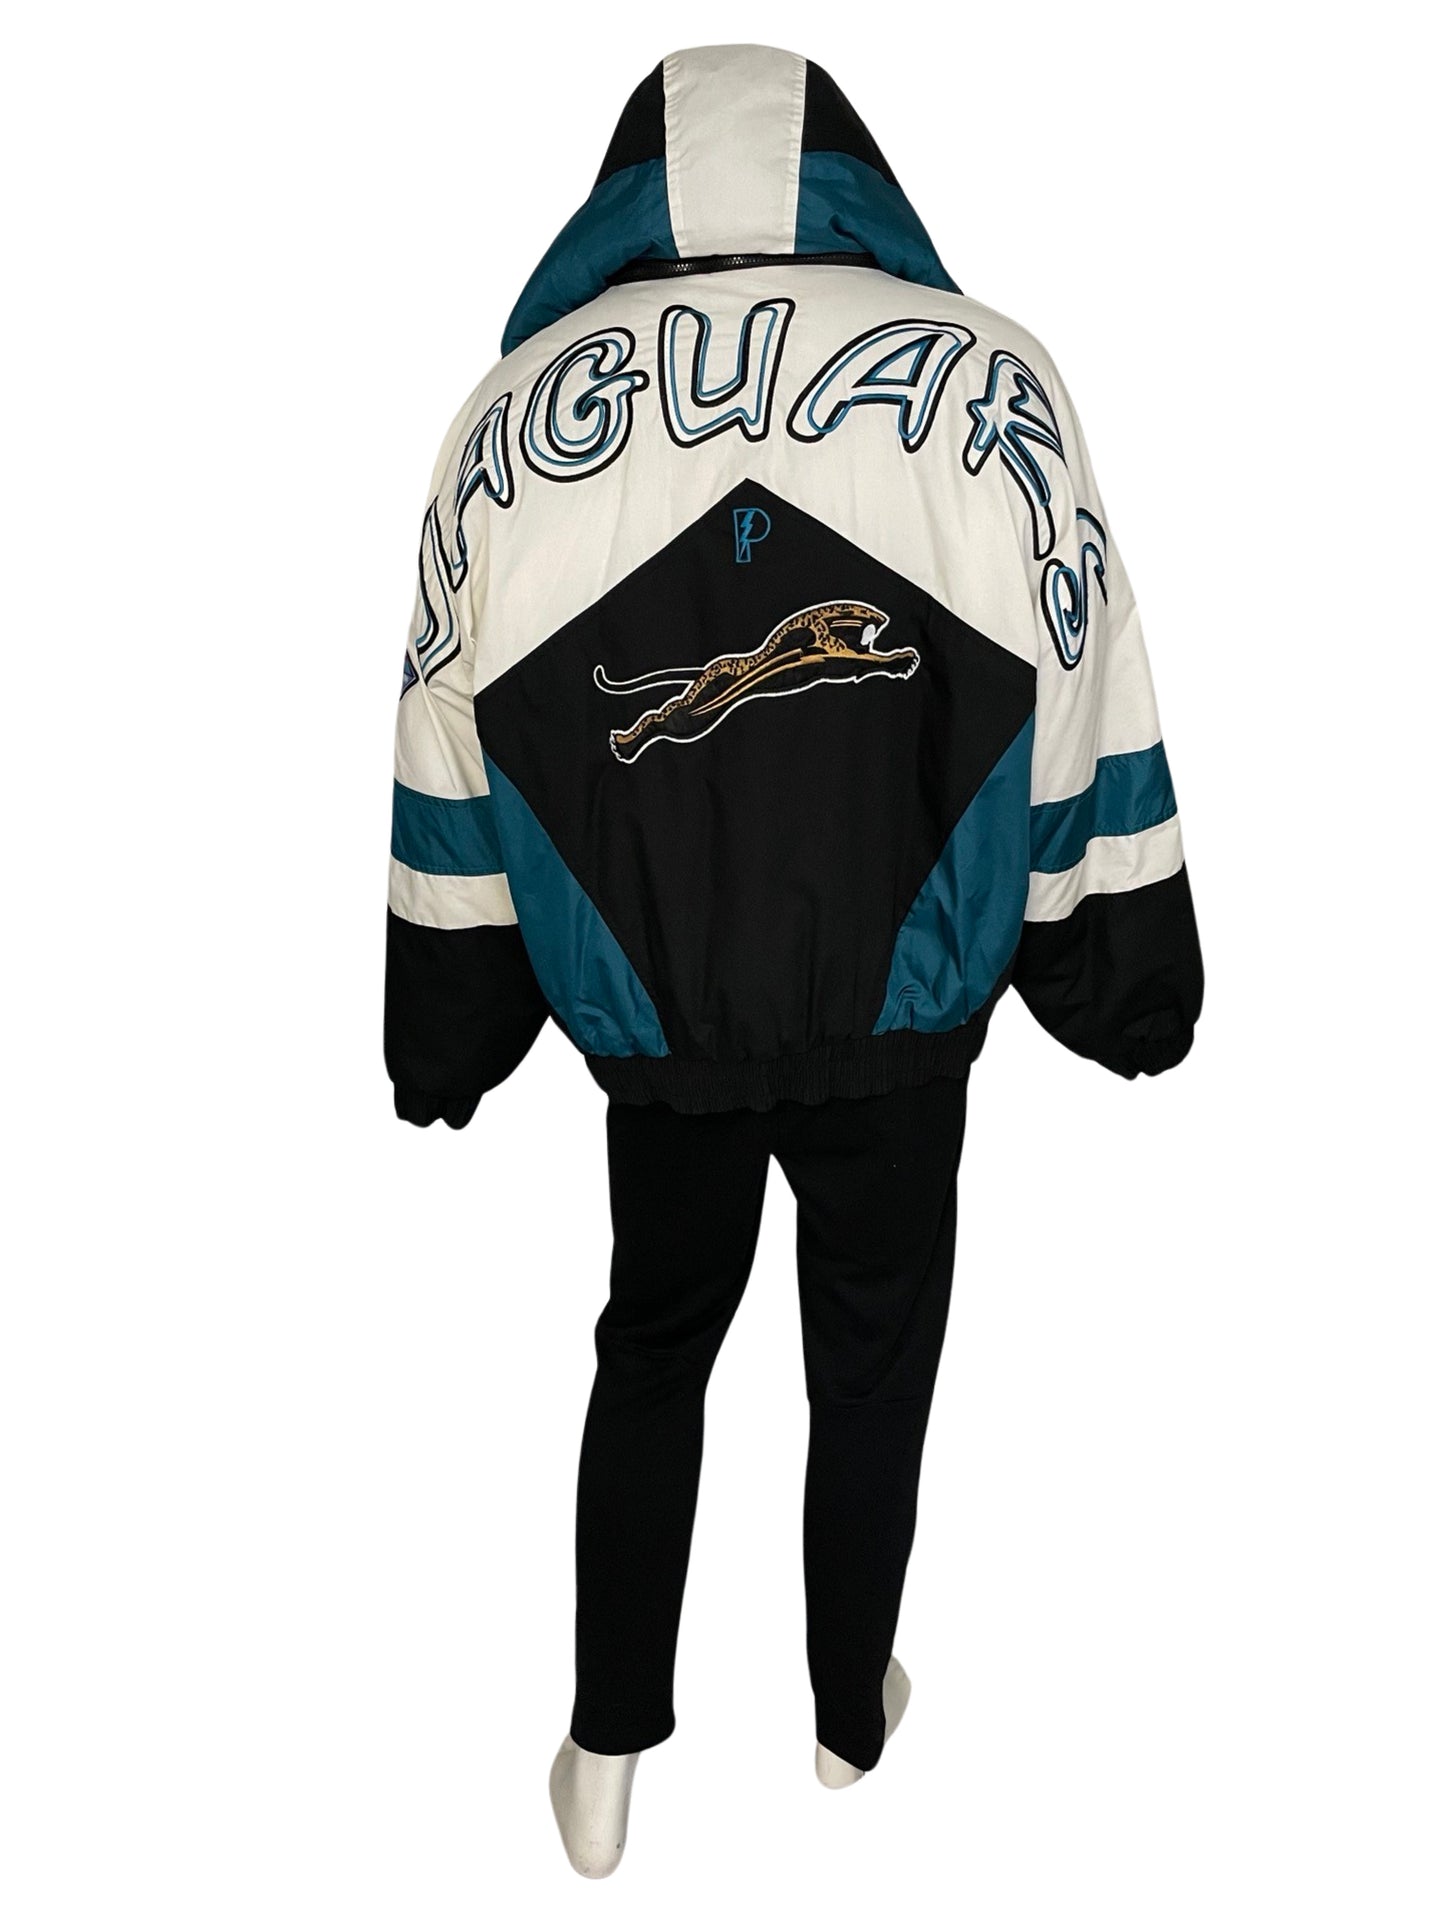 Vintage Jacksonville Jaguars banned logo PRO PLAYER by Daniel Young jacket size 2XL